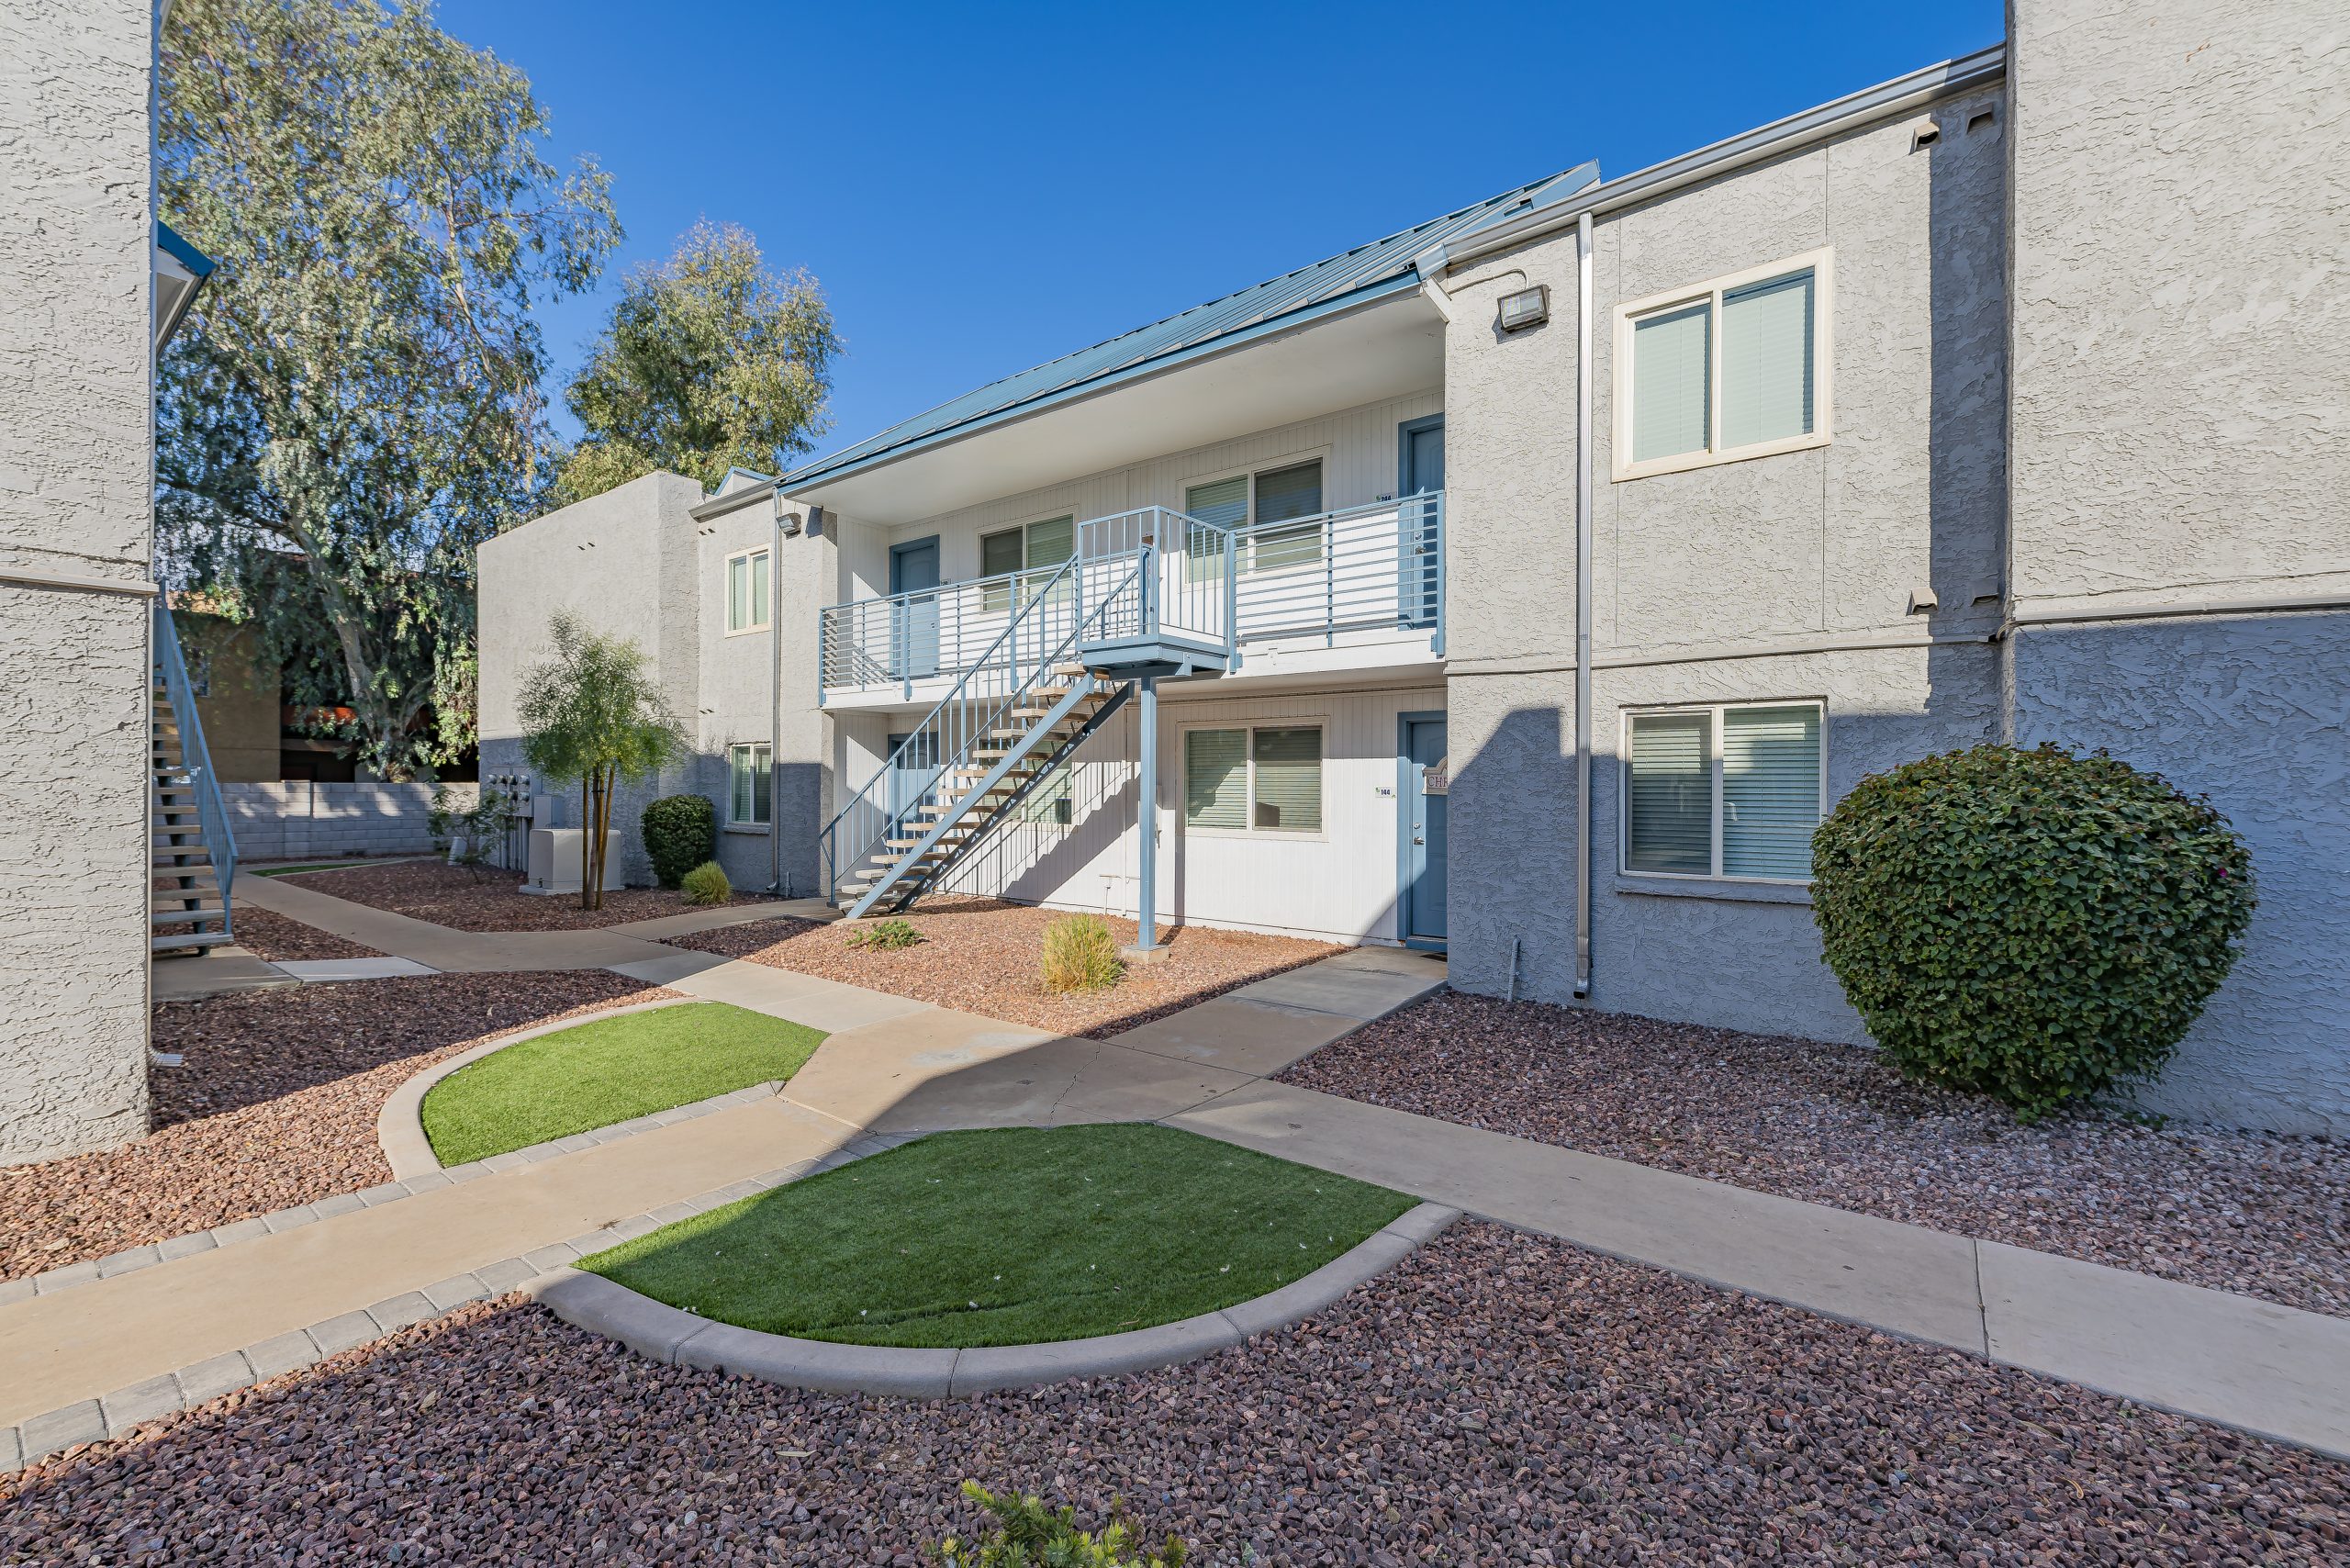 Clear Capital, LLC Acquires 104-Unit Multifamily Property in Phoenix, Arizona